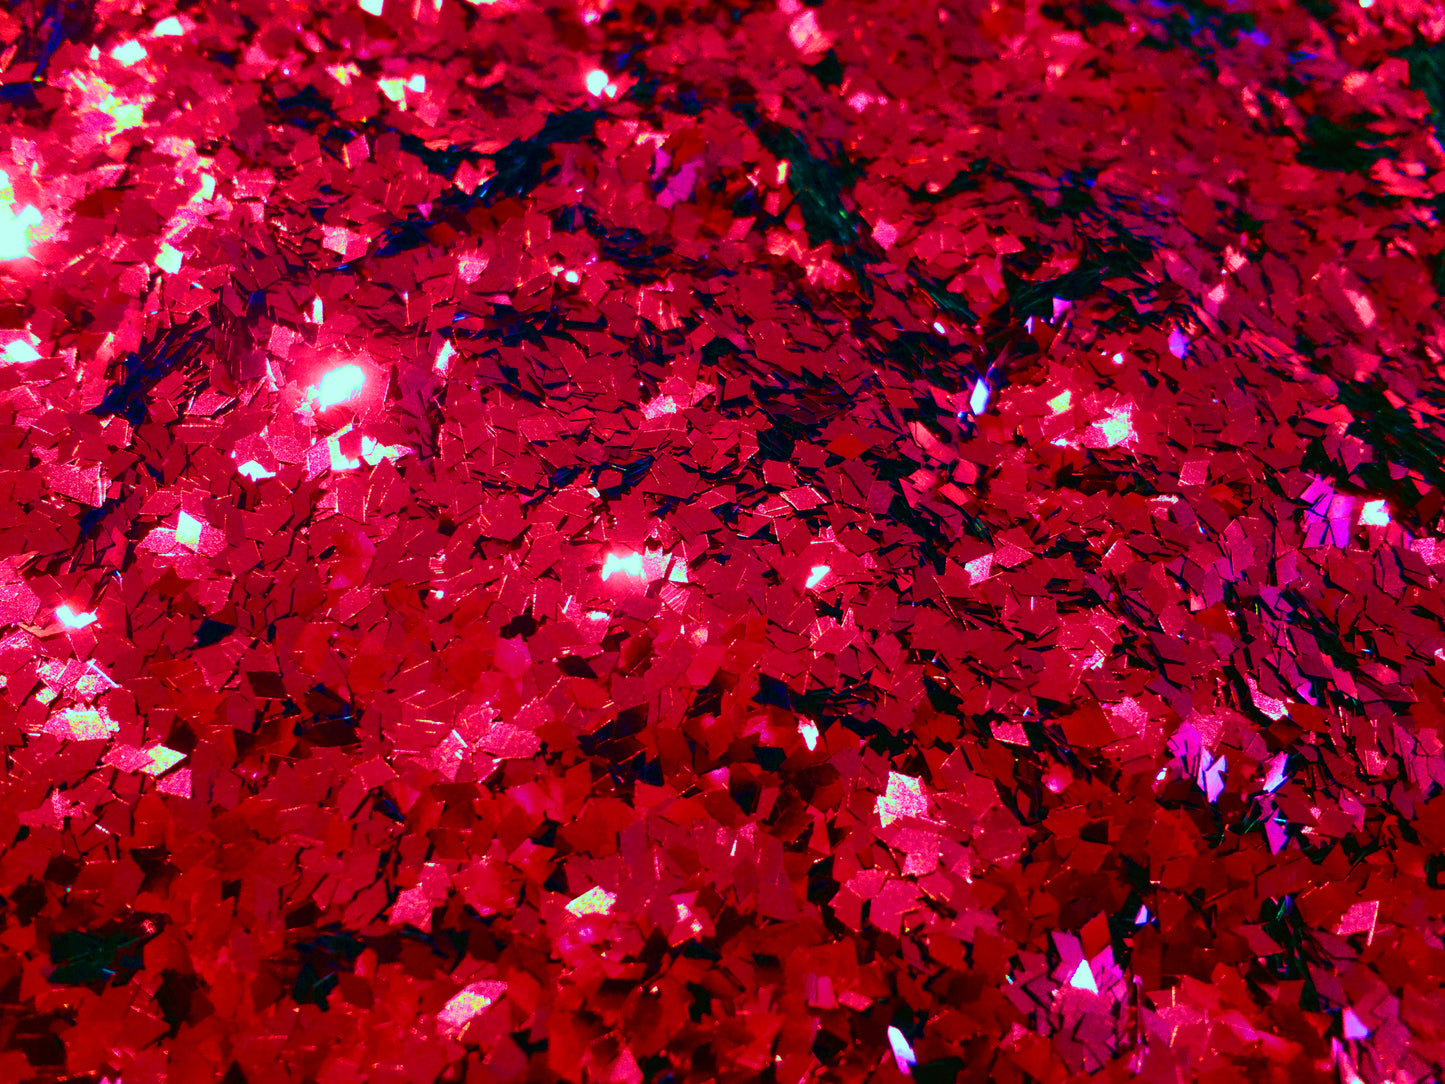 Candy Apple Red Diamond Shape Glitter, 3x1.5mm